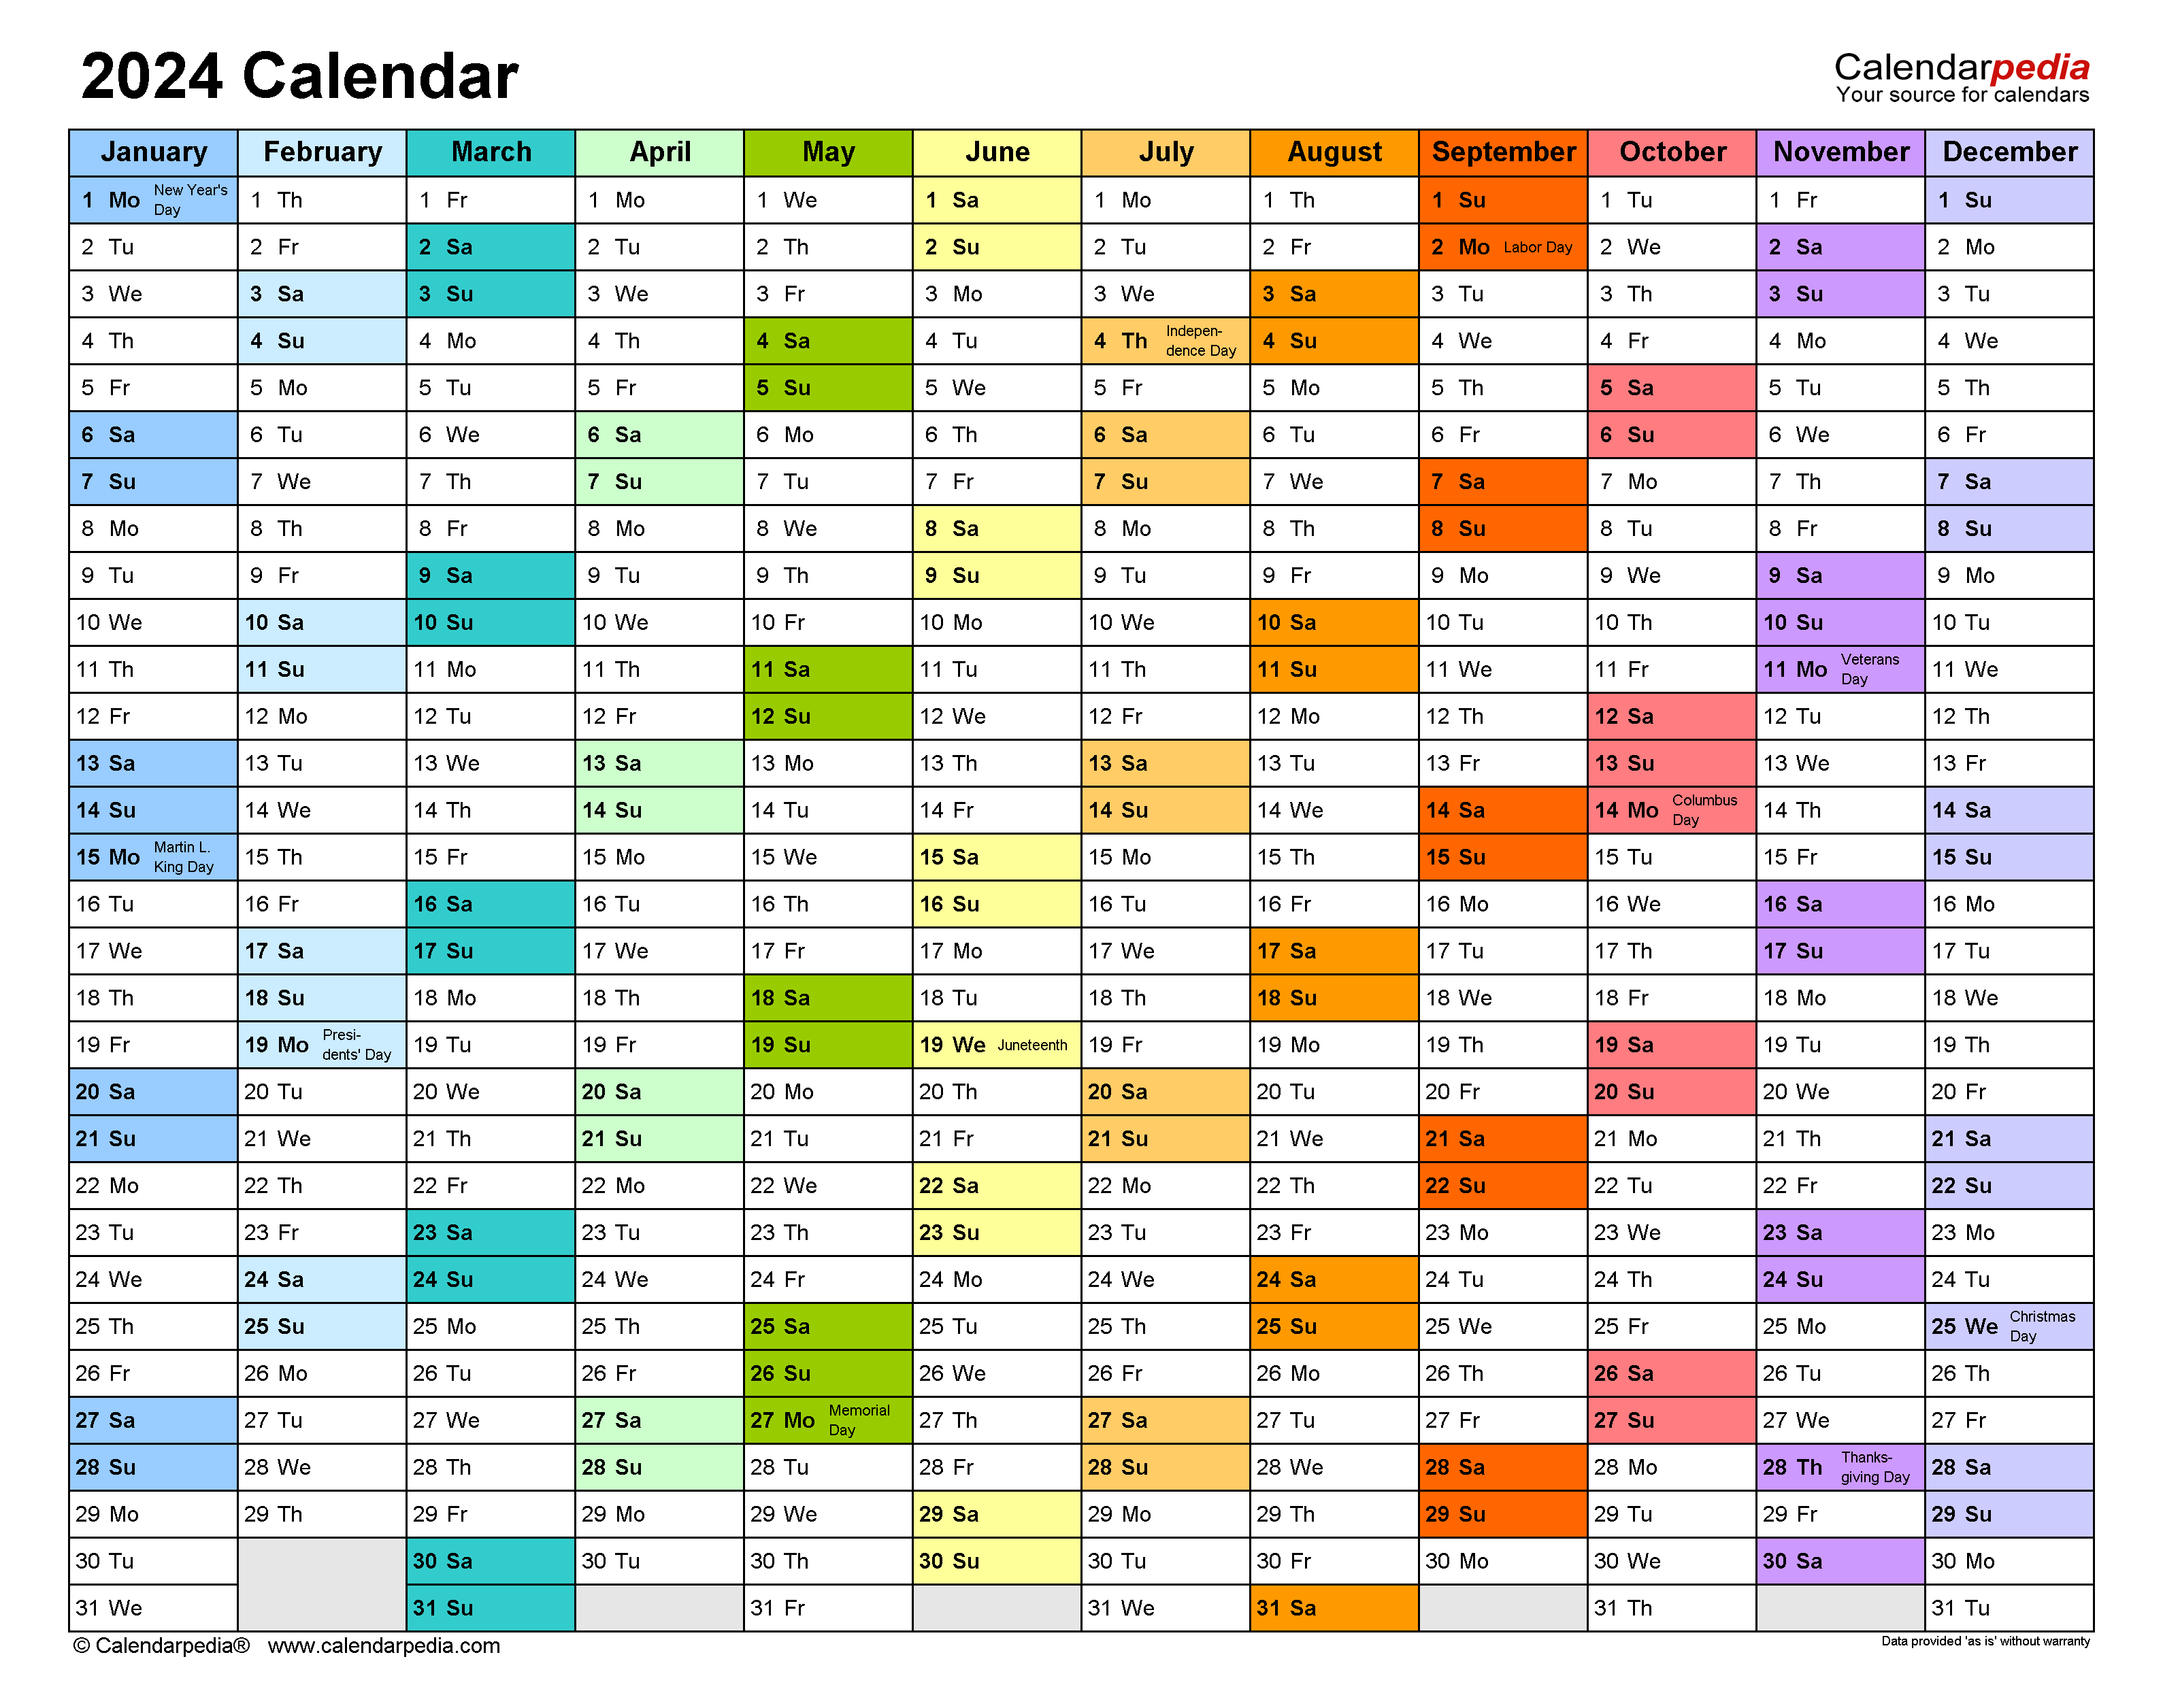 2024 Calendar - Free Printable Word Templates - Calendarpedia for Windows Printable Calendar 2024